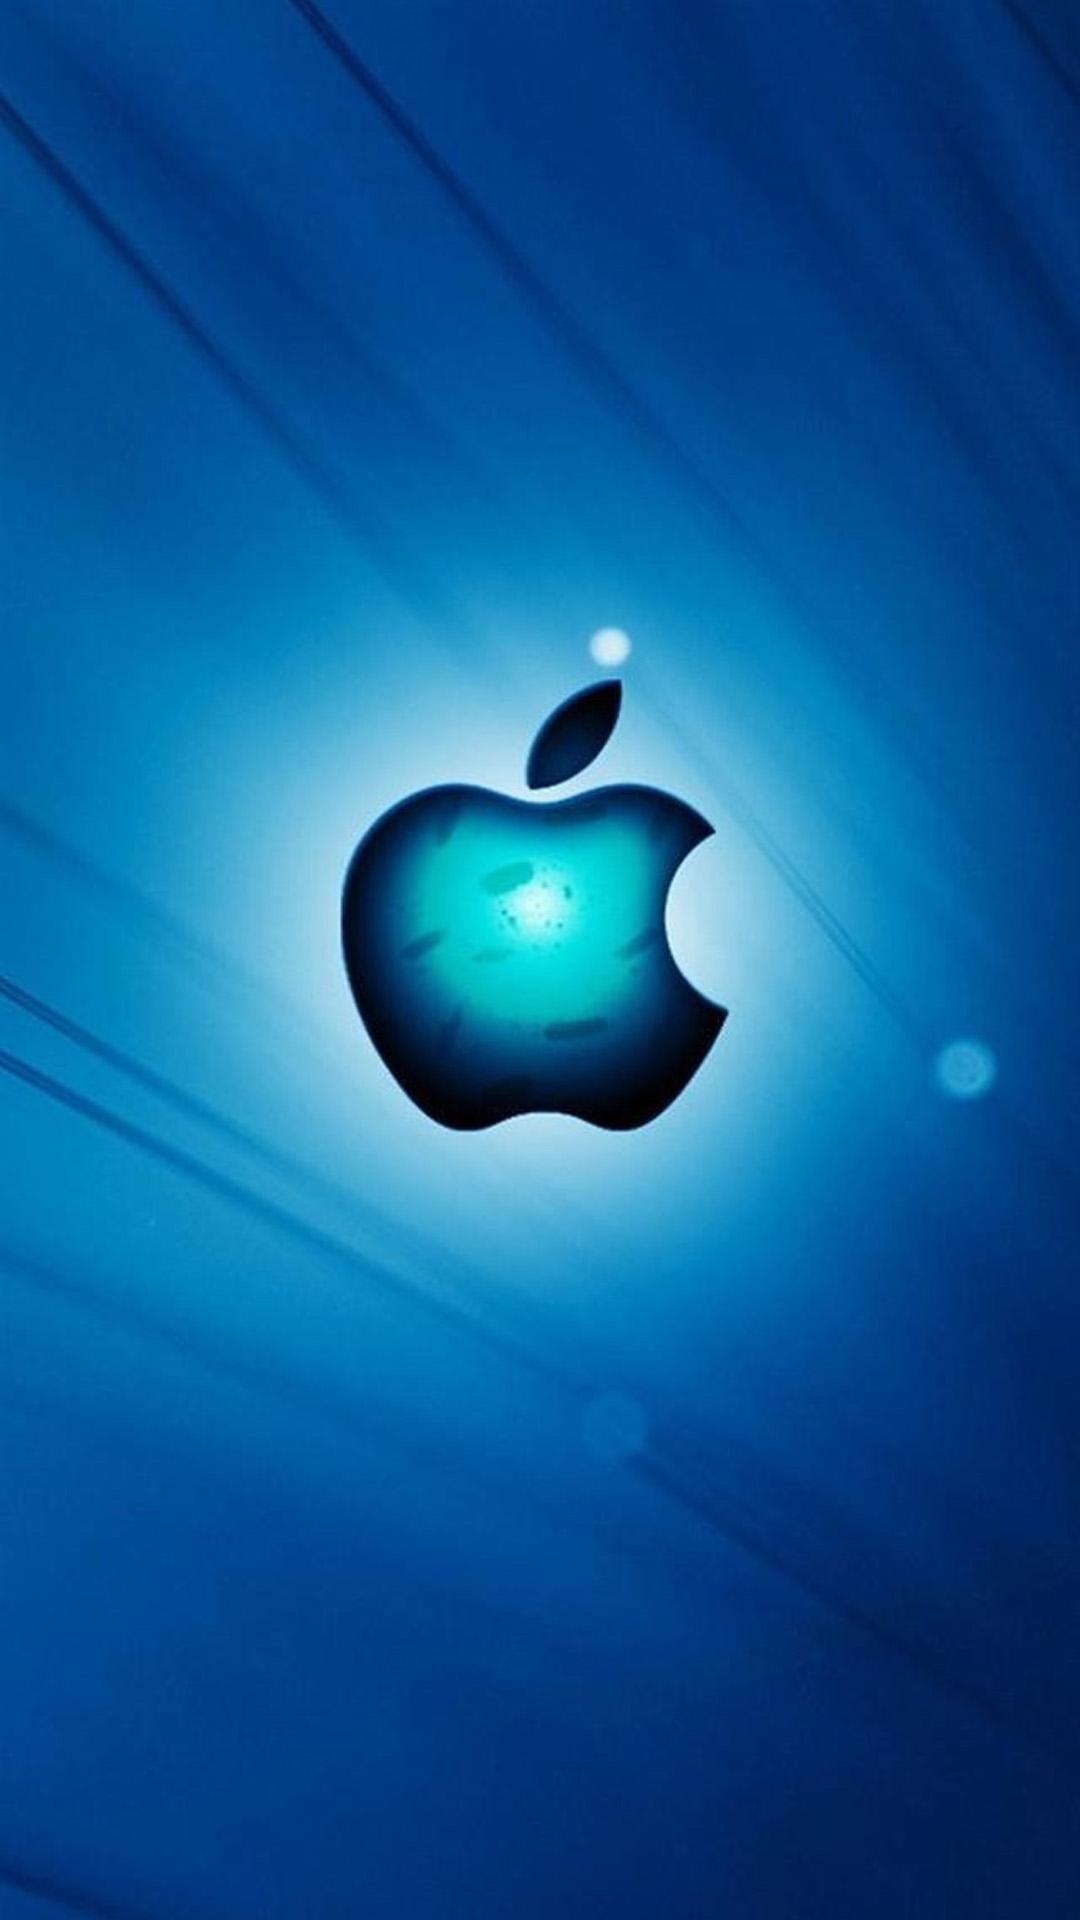 1080 x 1920 · jpeg - Download Free Apple Logo Background for Iphone | PixelsTalk